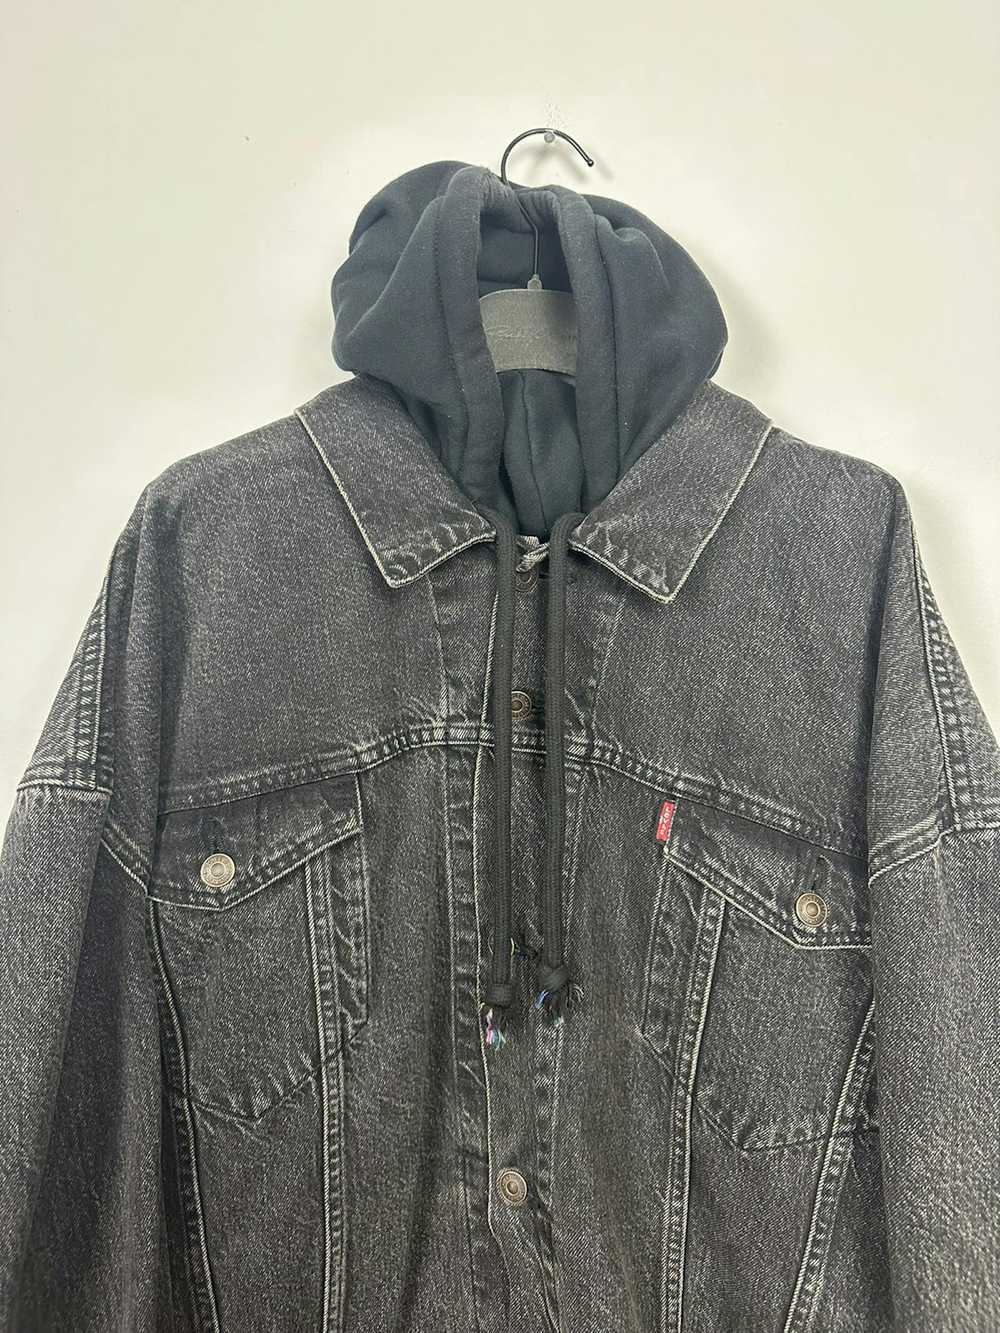 Levi's × Vetements SS17 Hooded Denim Jacket - image 3